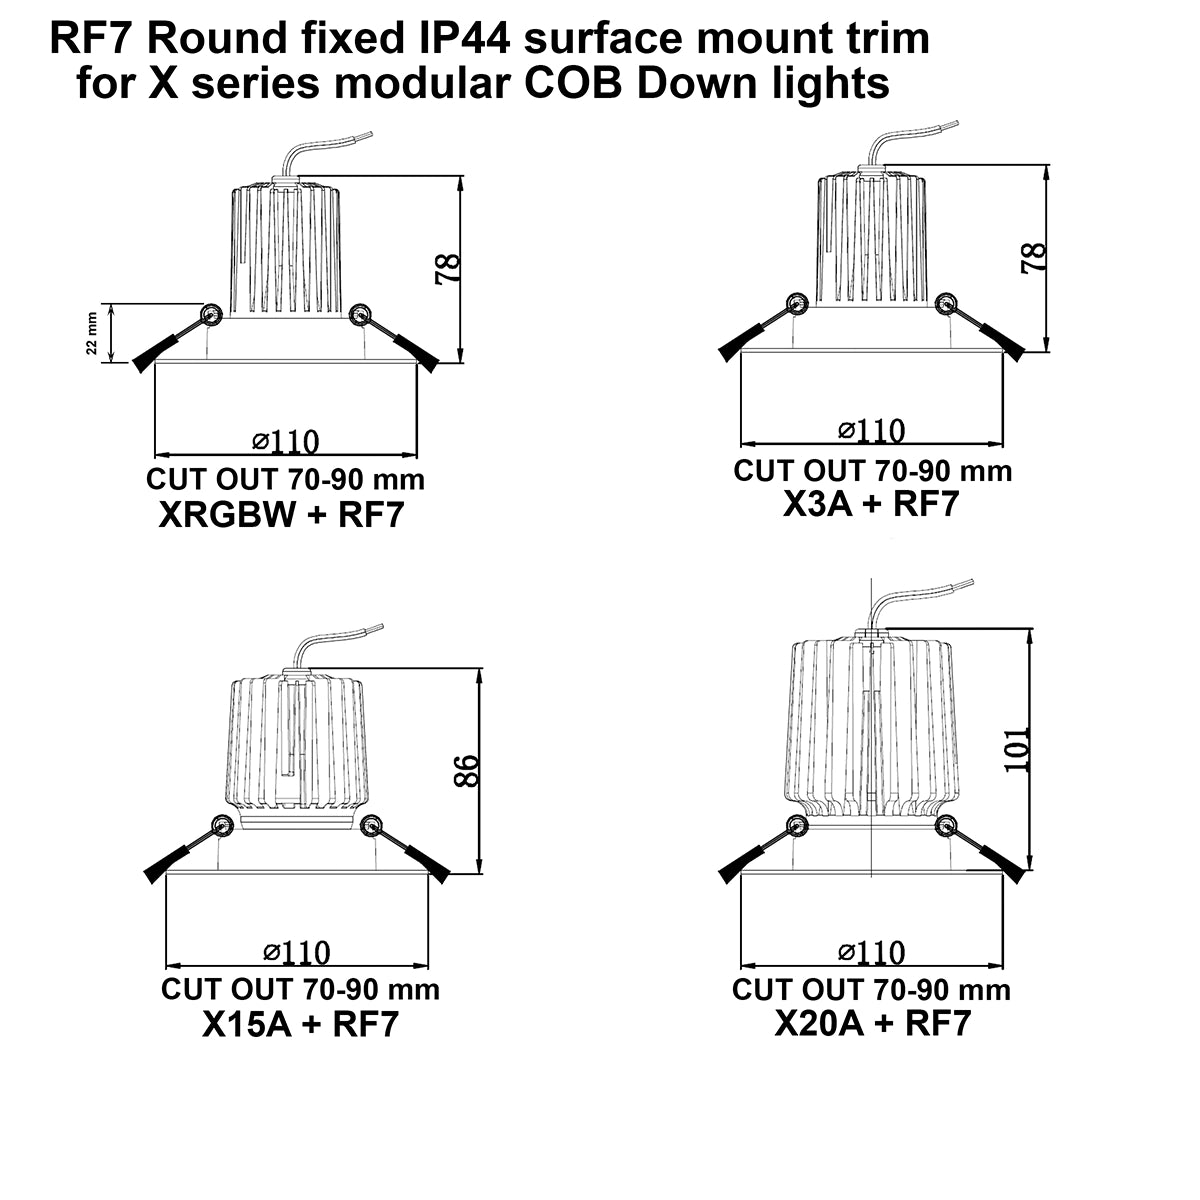 RF7 White- Round fix IP44 surface mount trim for X Series COB Modules